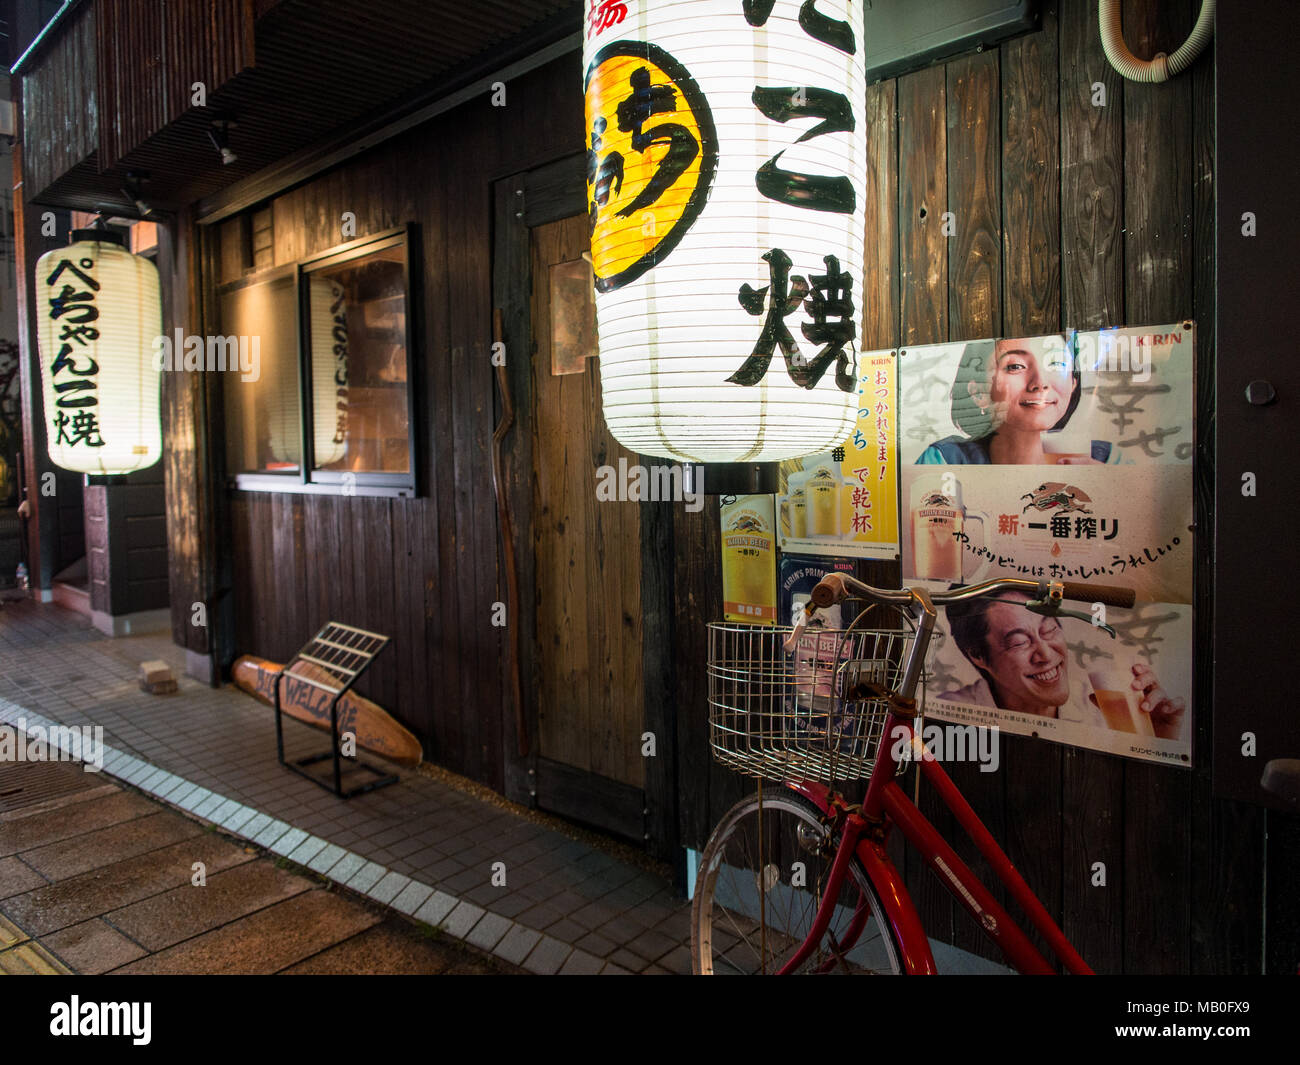 Chochin lantern and bicycle, night street in Beppu, Kyushu, Japan Stock Photo